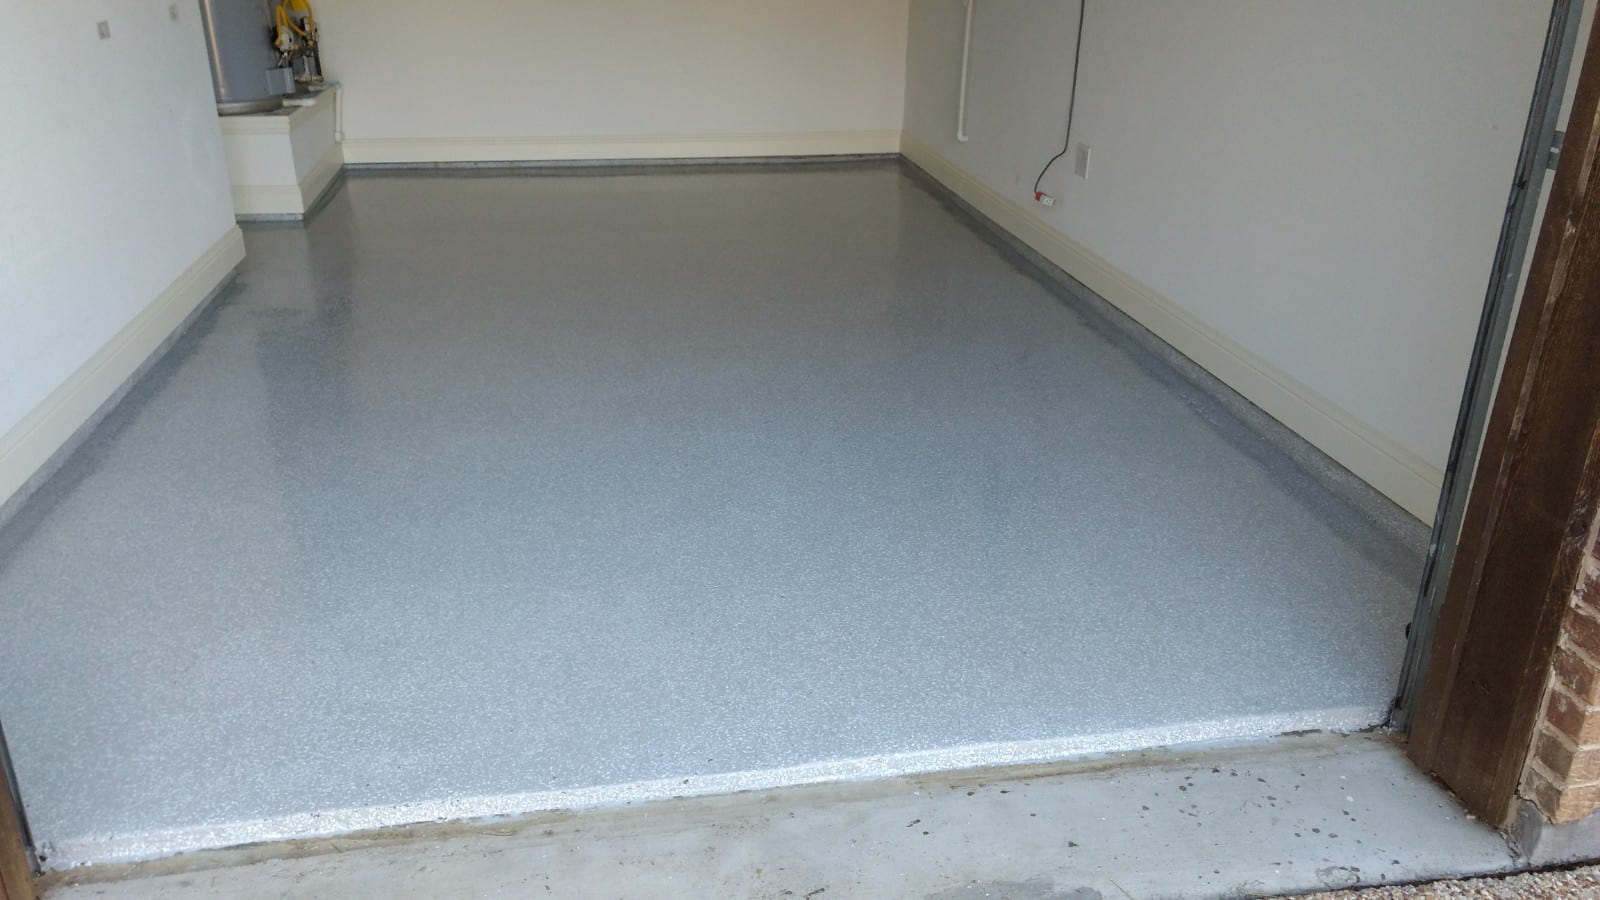 Premium Clear Floor Epoxy for Metallic Floor System Metallic Clear